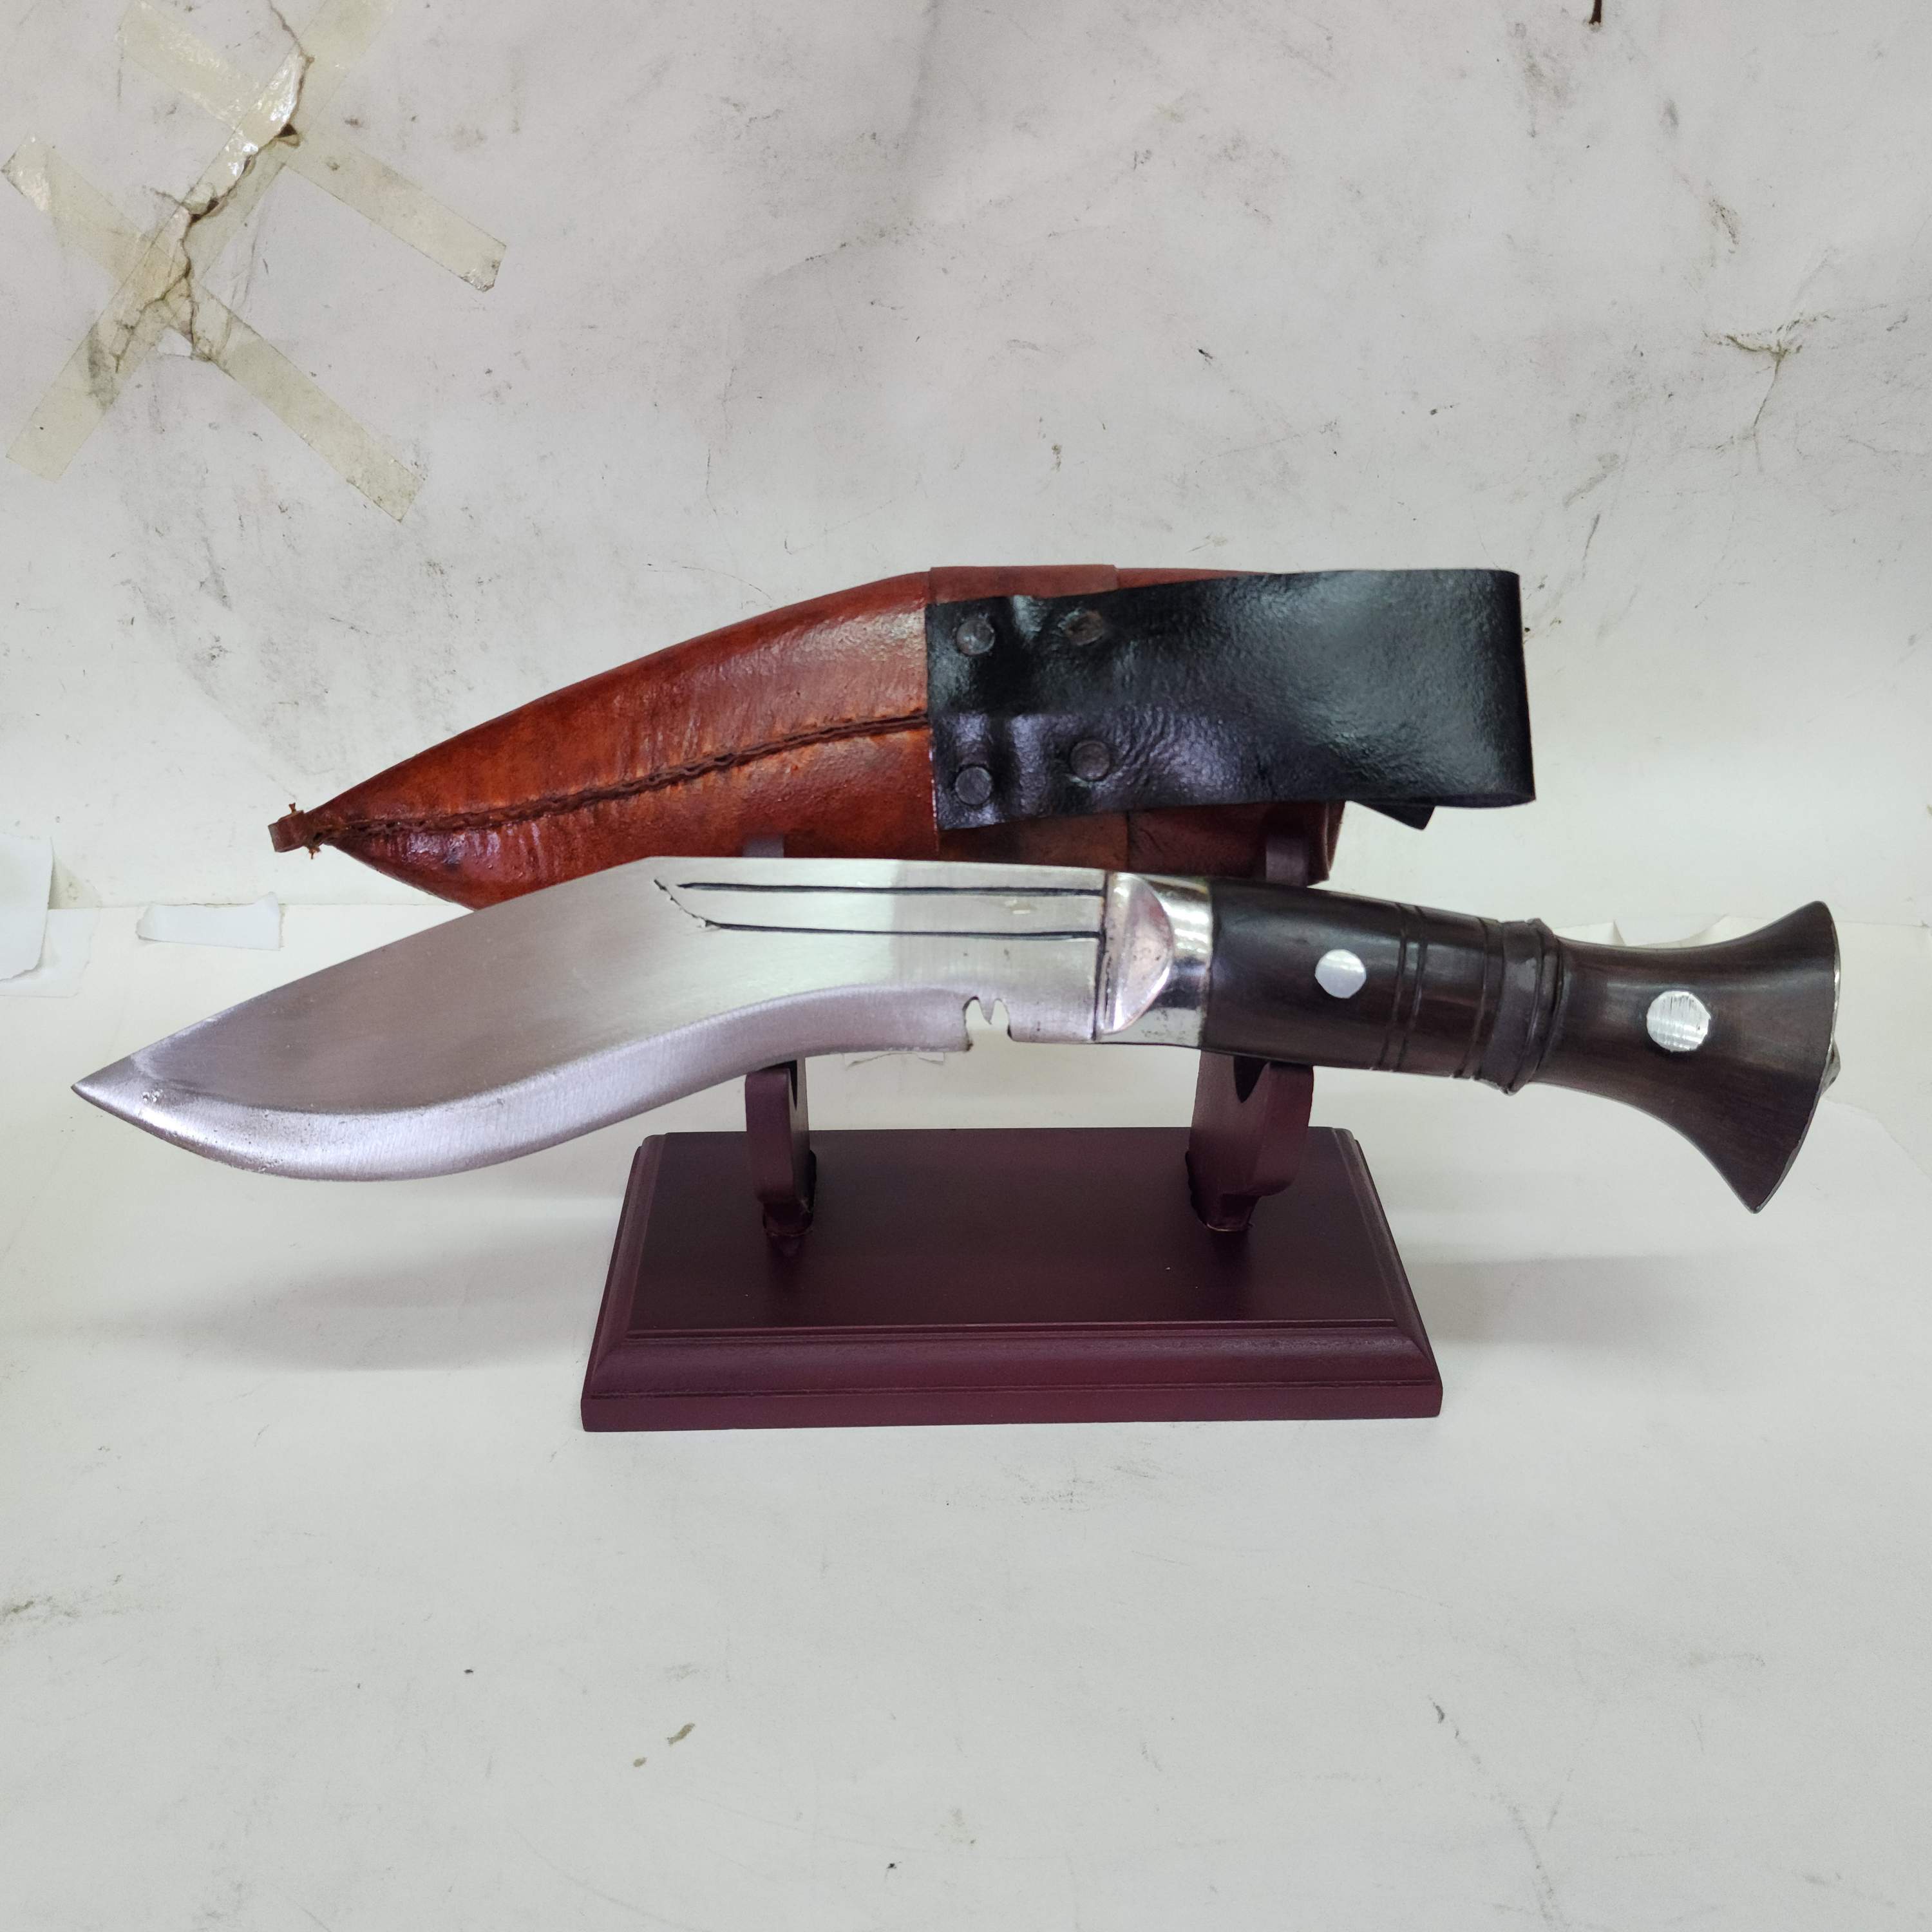 6 Inch, panawala Khukuri, Gurkha Knife - With Leather Cover And Stand, Nepali Machete